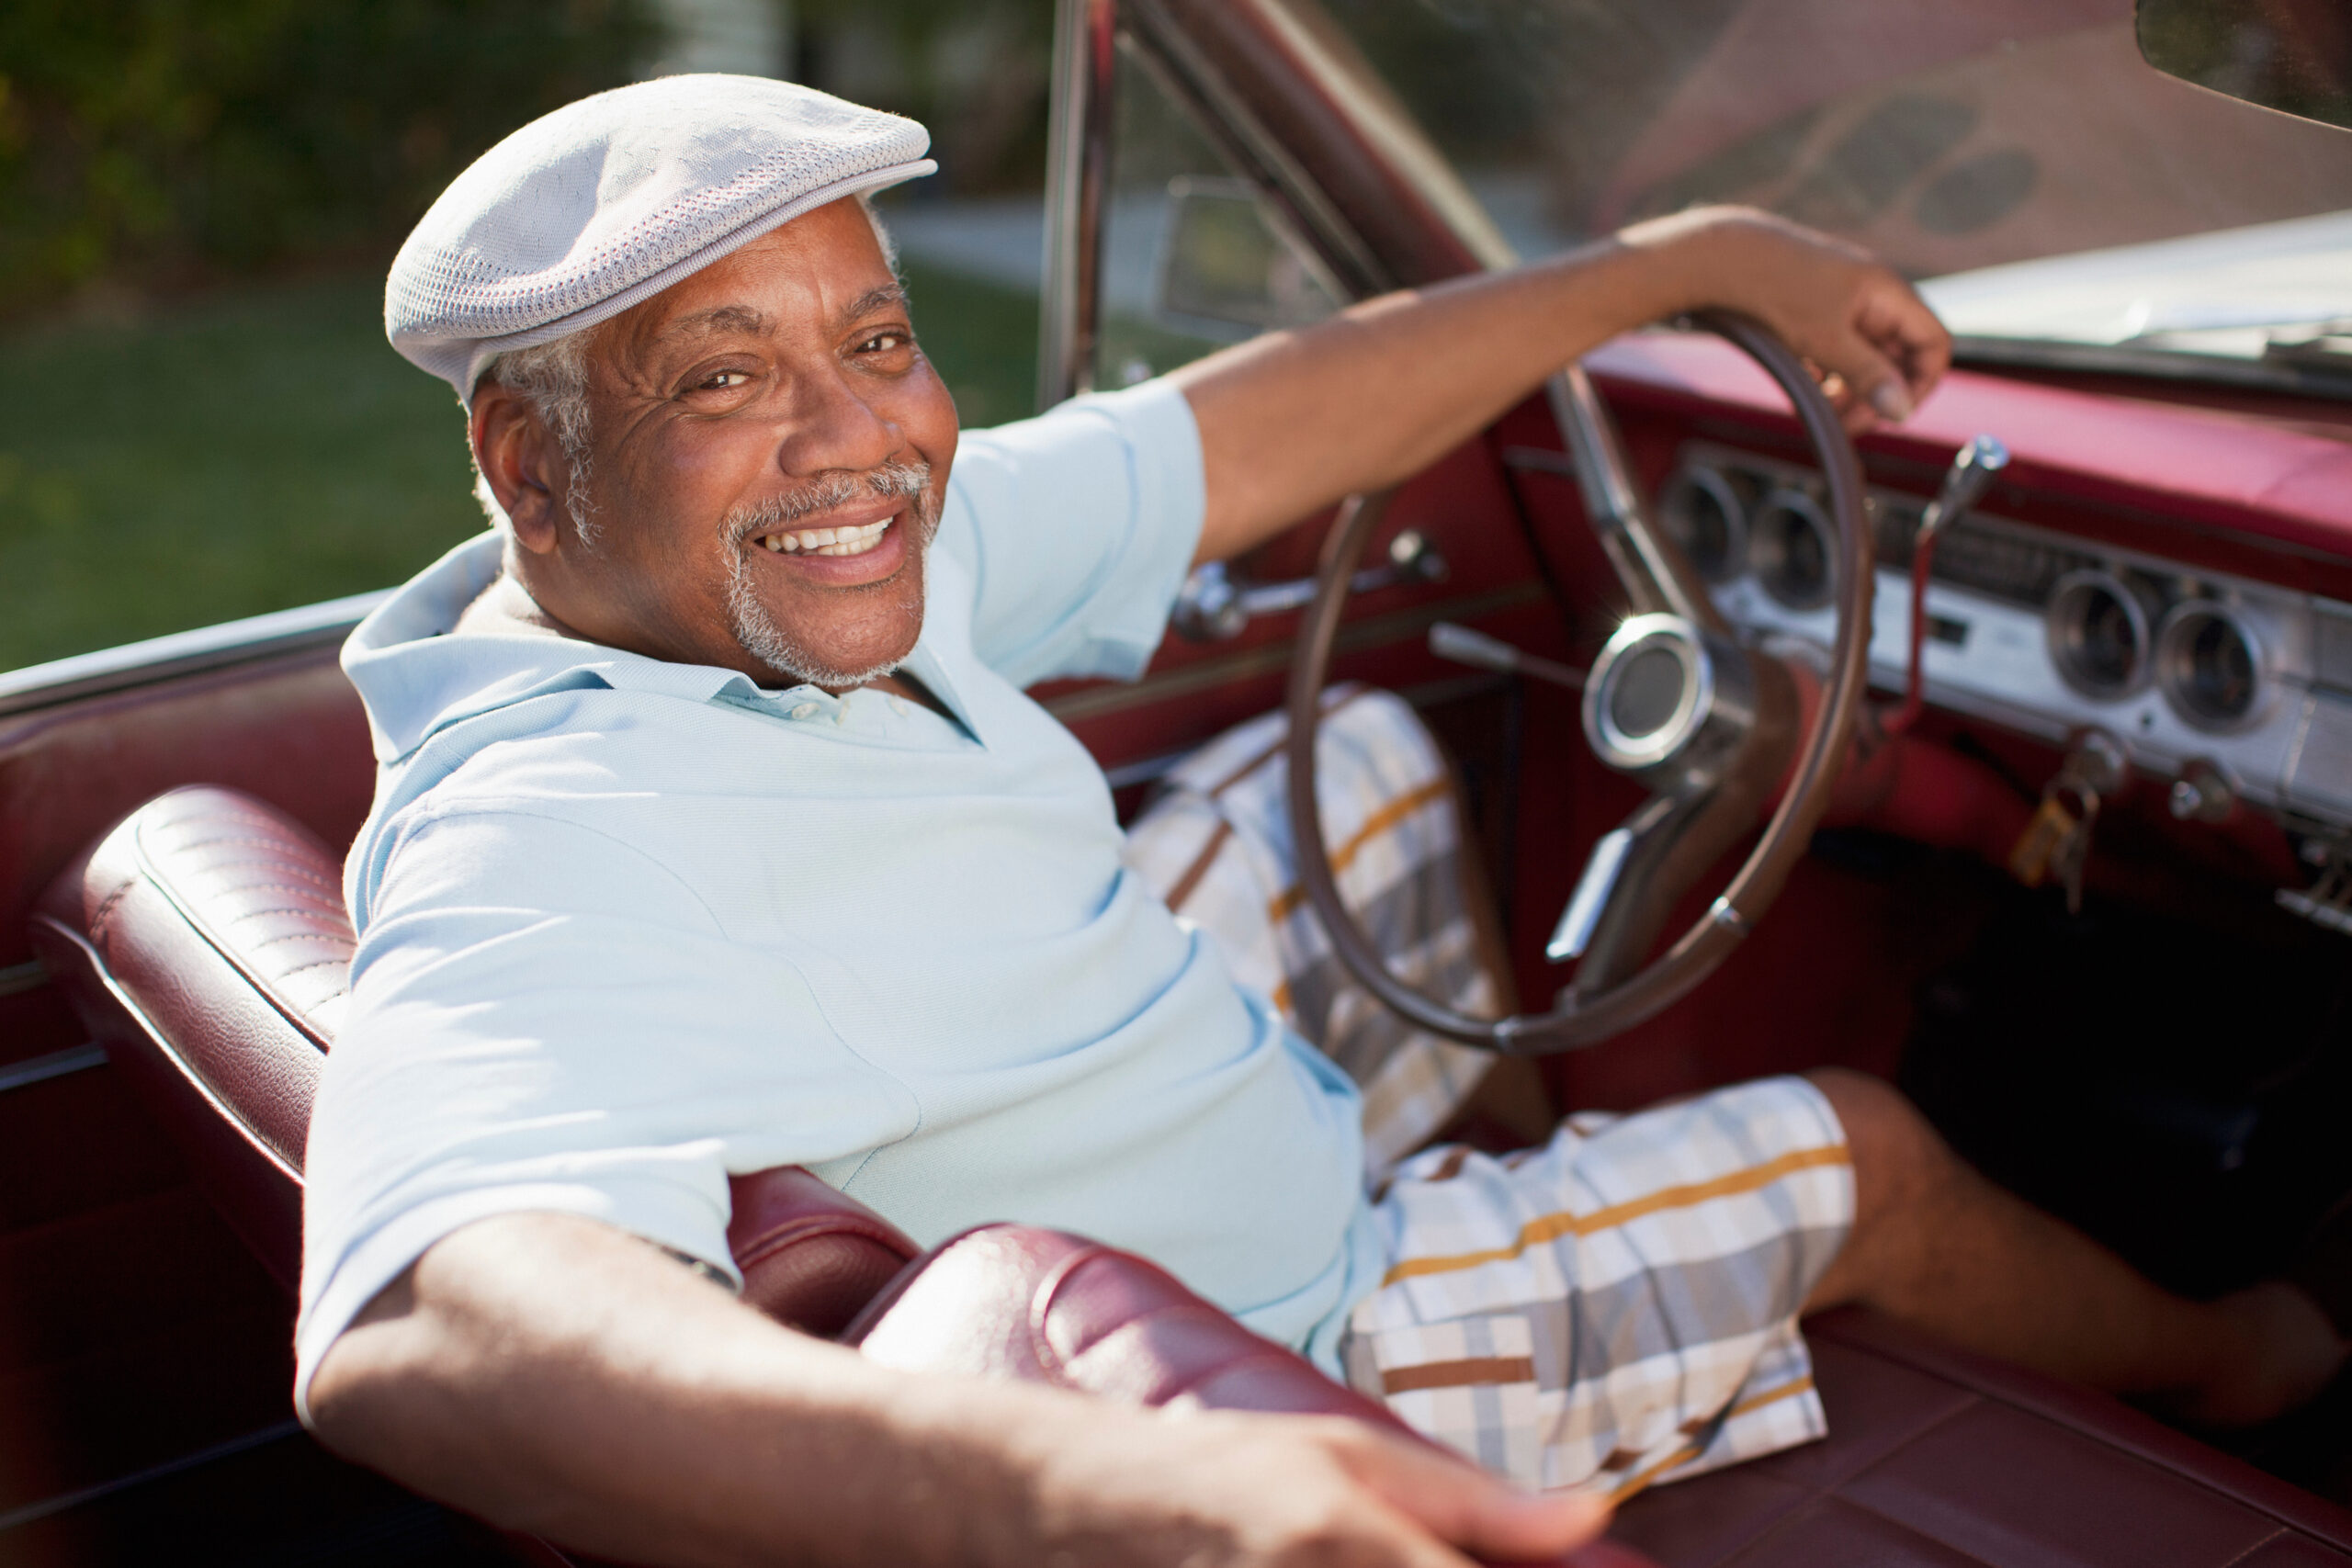 Smiling Older Man Driving Convertible